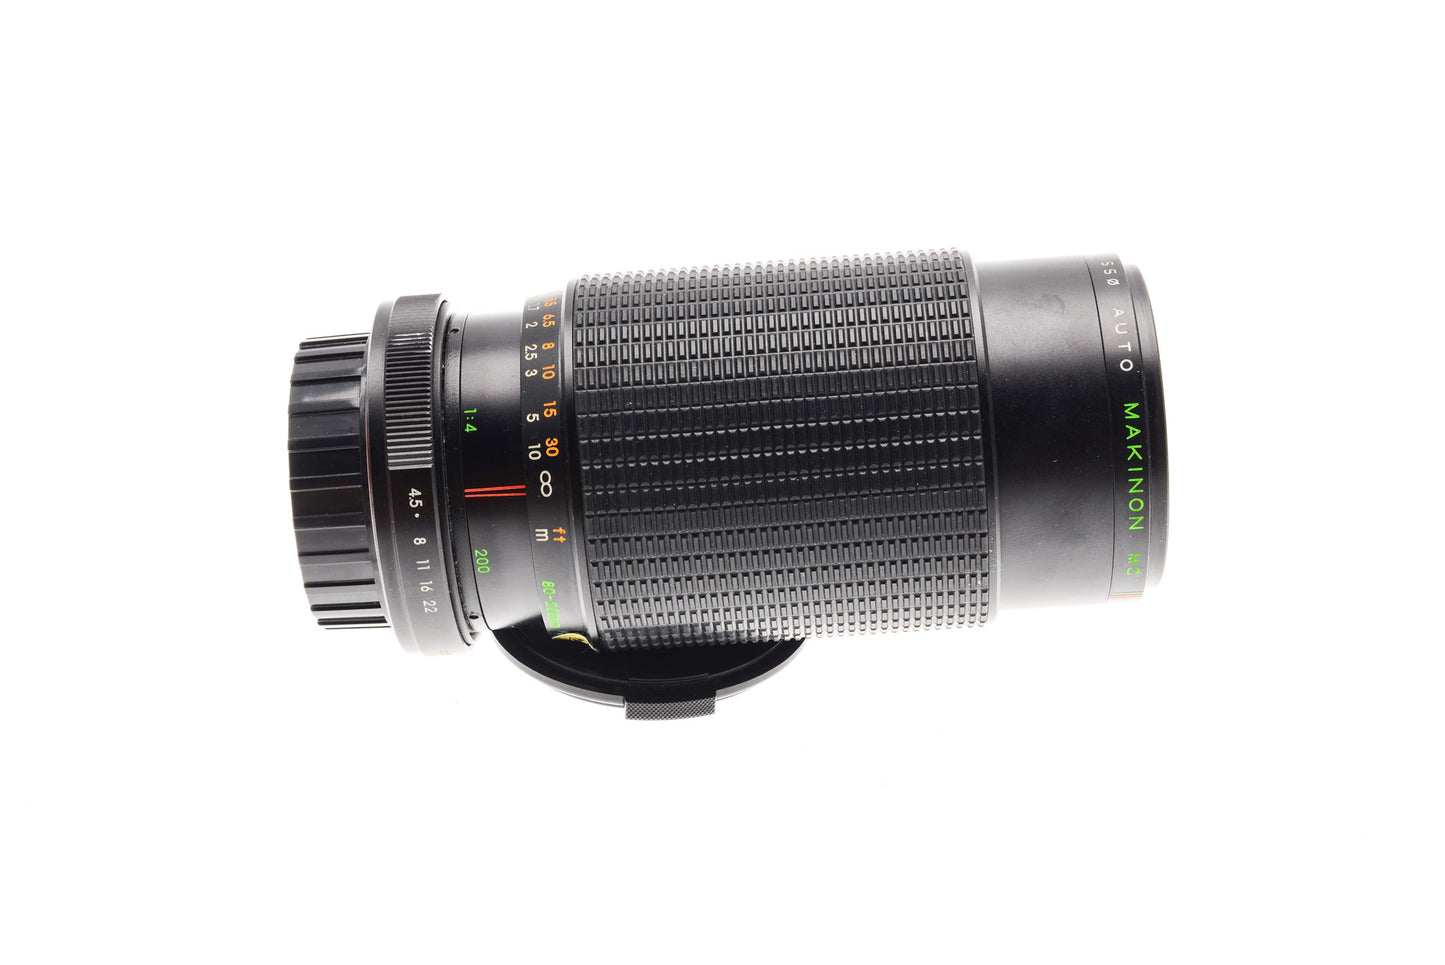 Makinon 80-200mm f4.5 MC Zoom - Lens